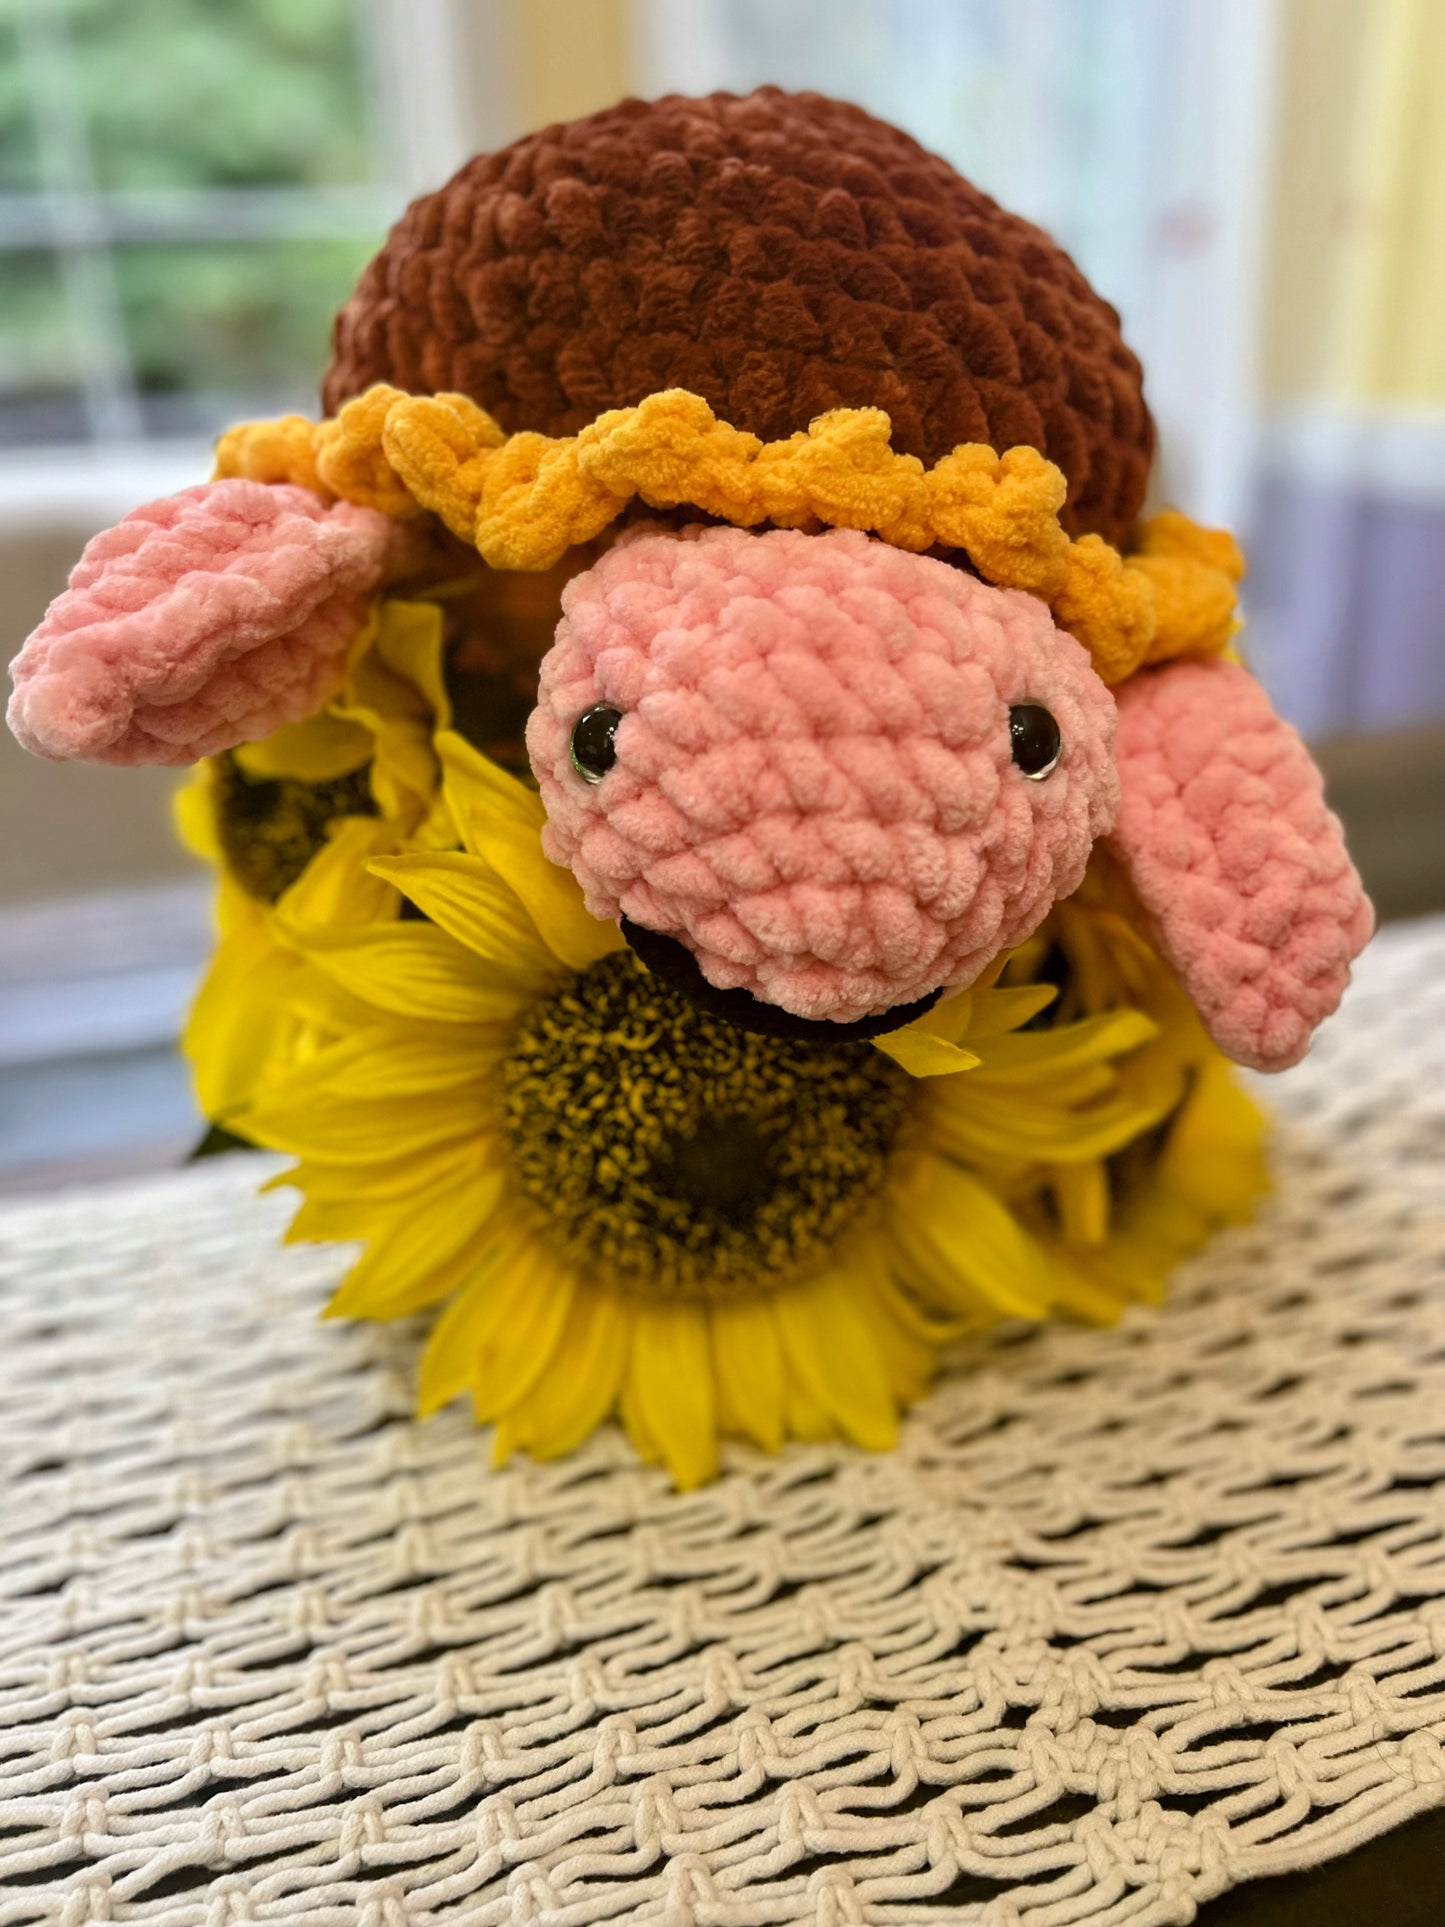 Sunflower 🌻  Seaturtle 🐢 - Crochet Knitted Amigurumi Toy